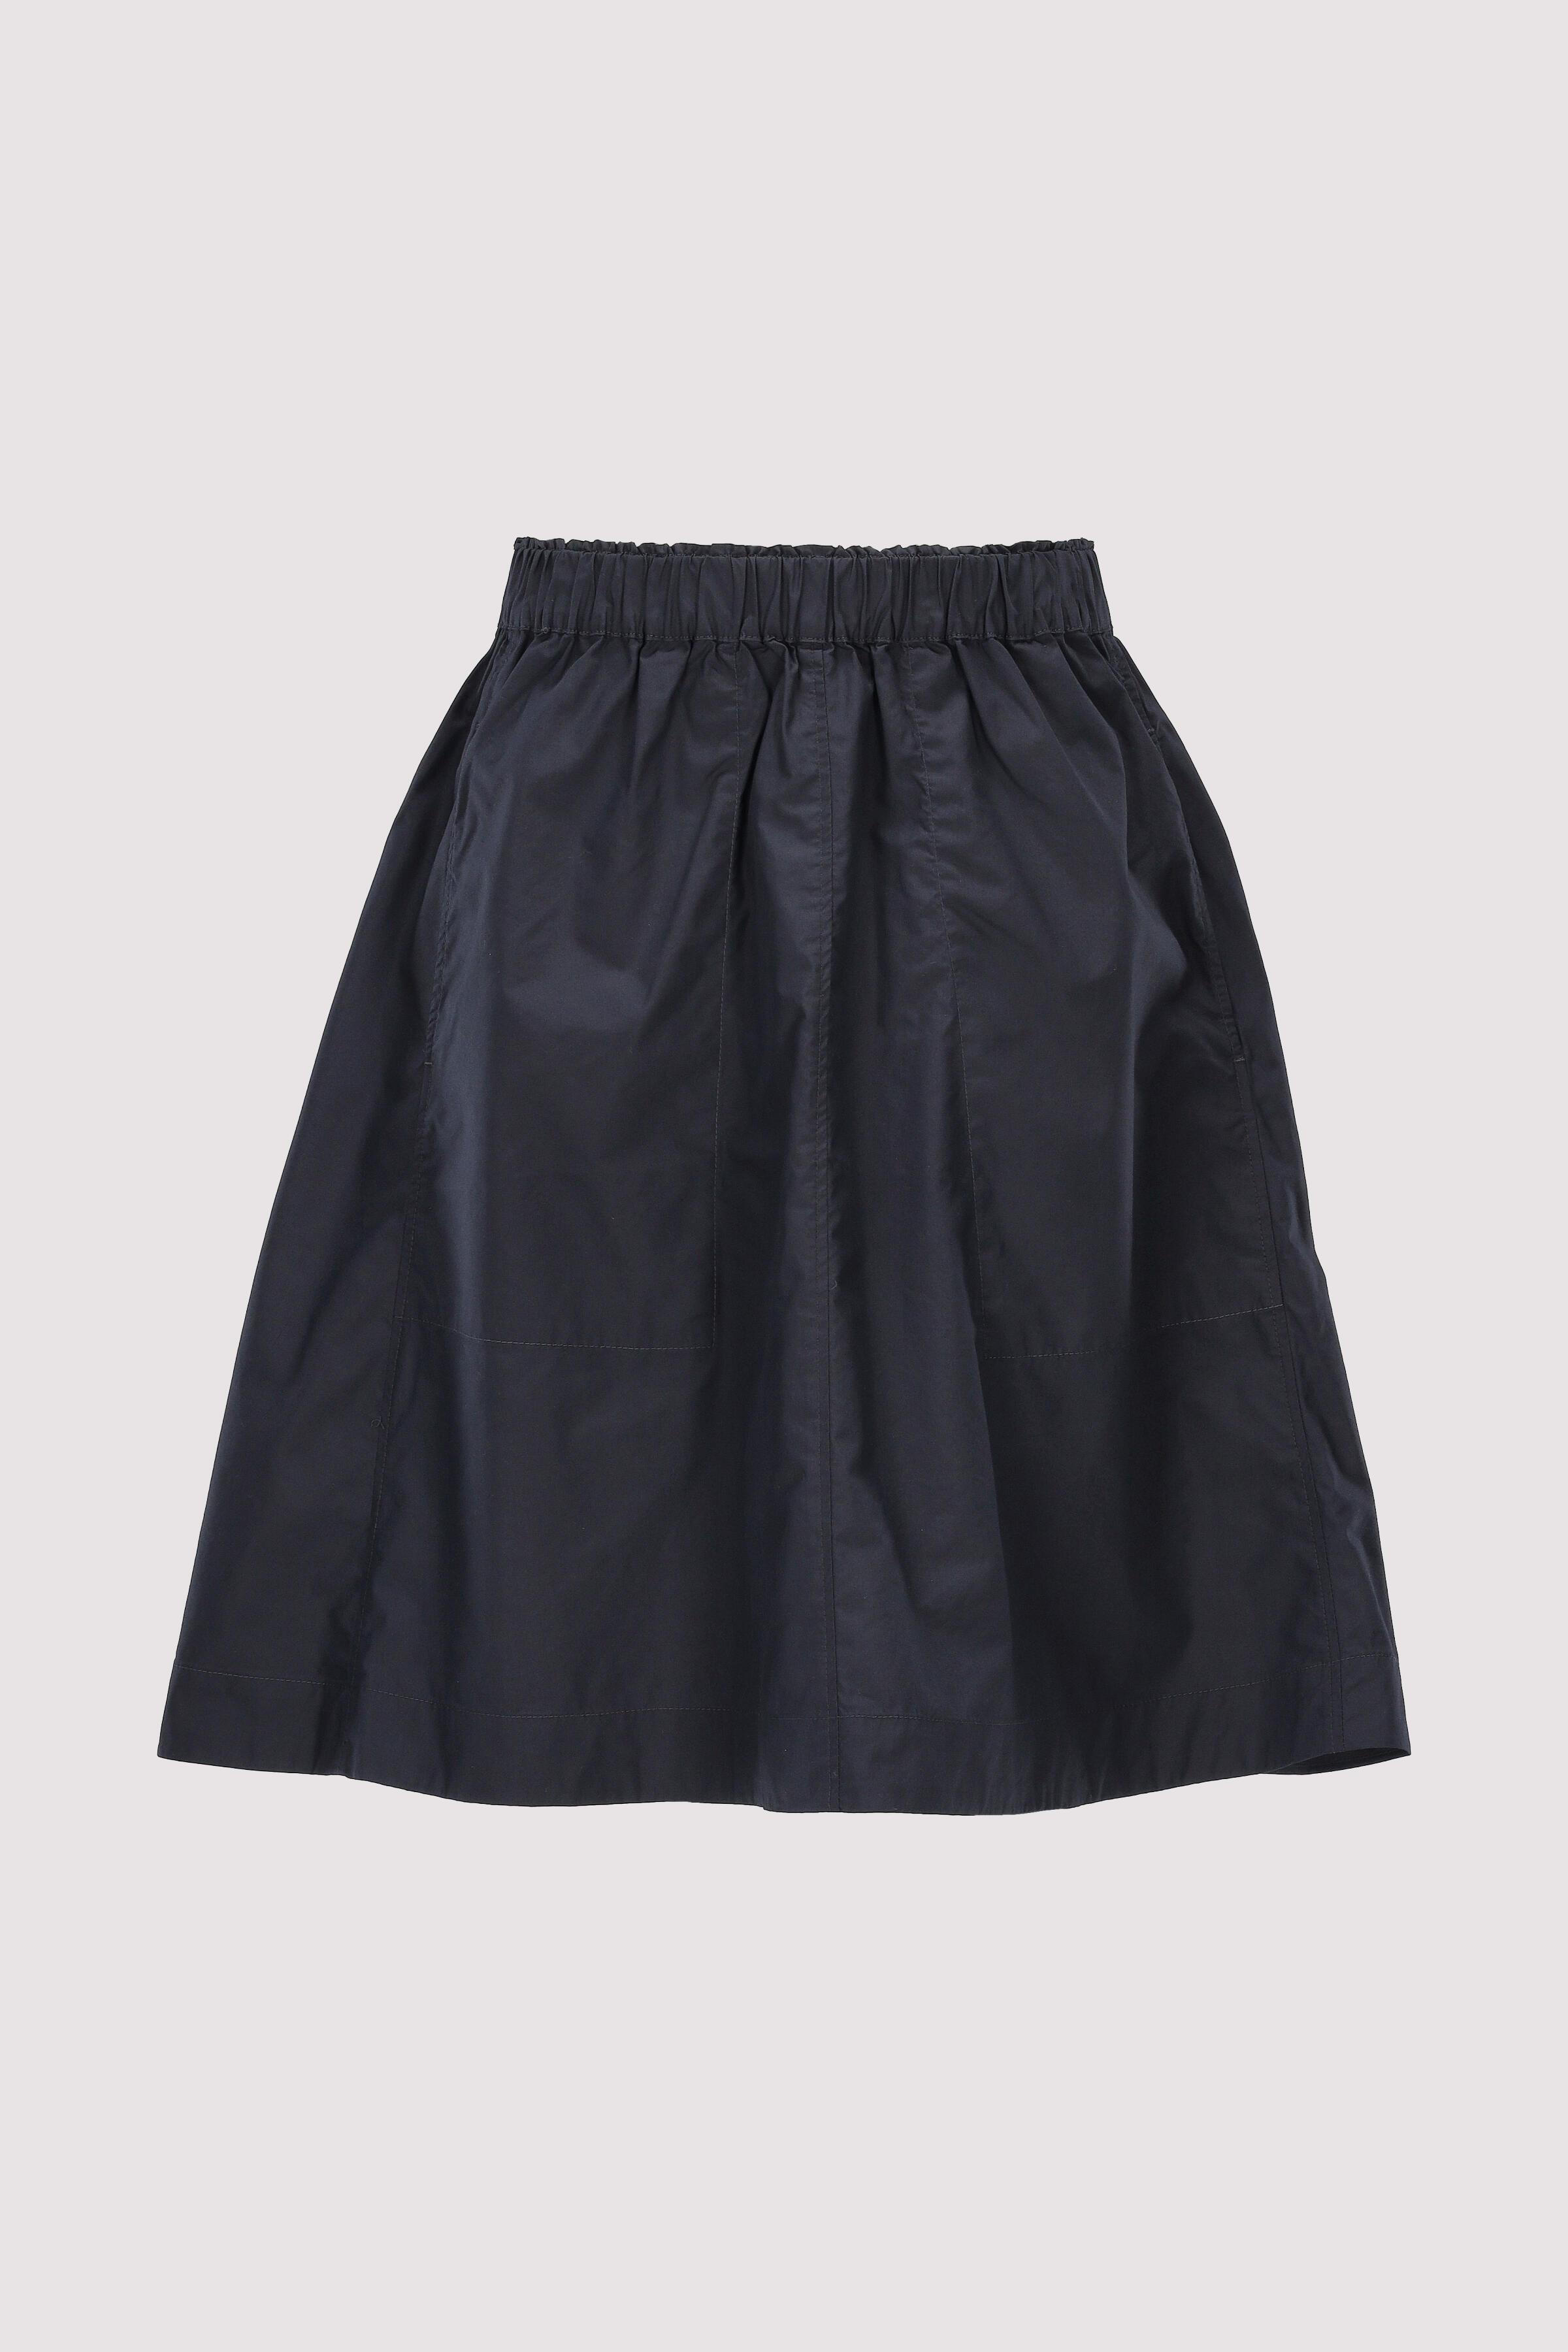 Skirt, a-shape, elastic waist,